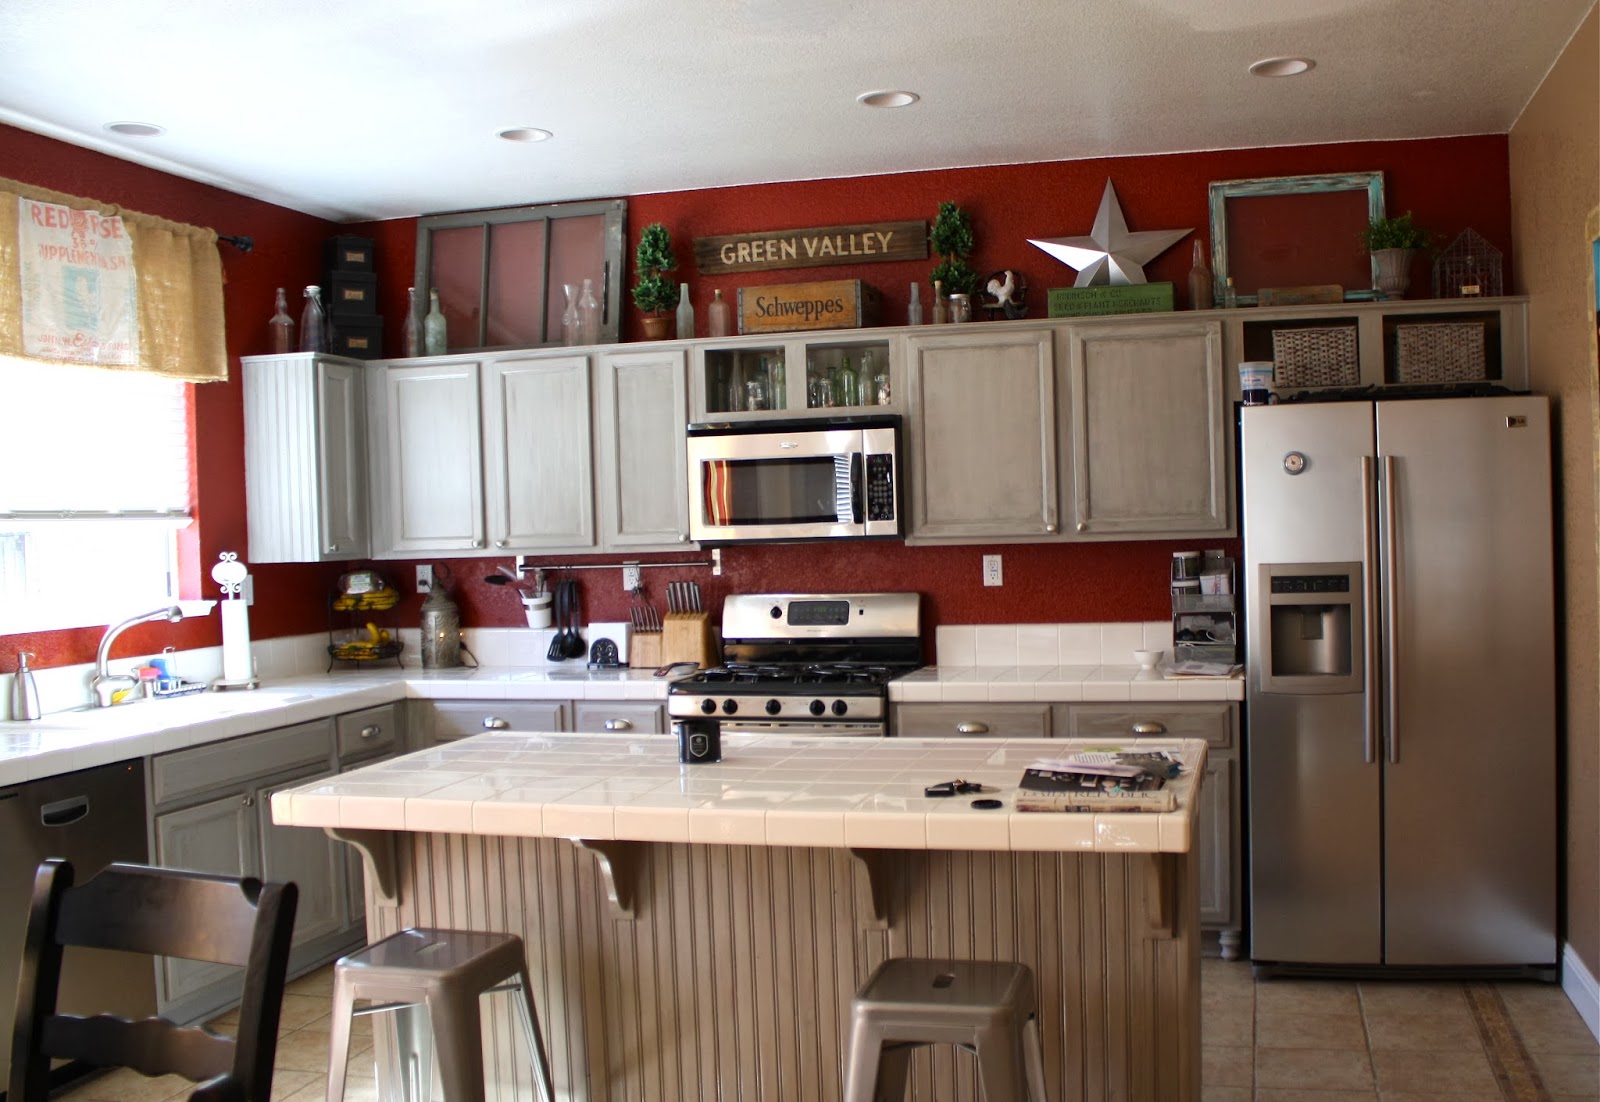 Dwelling By Design DIY Kitchen Cabinet Remodel